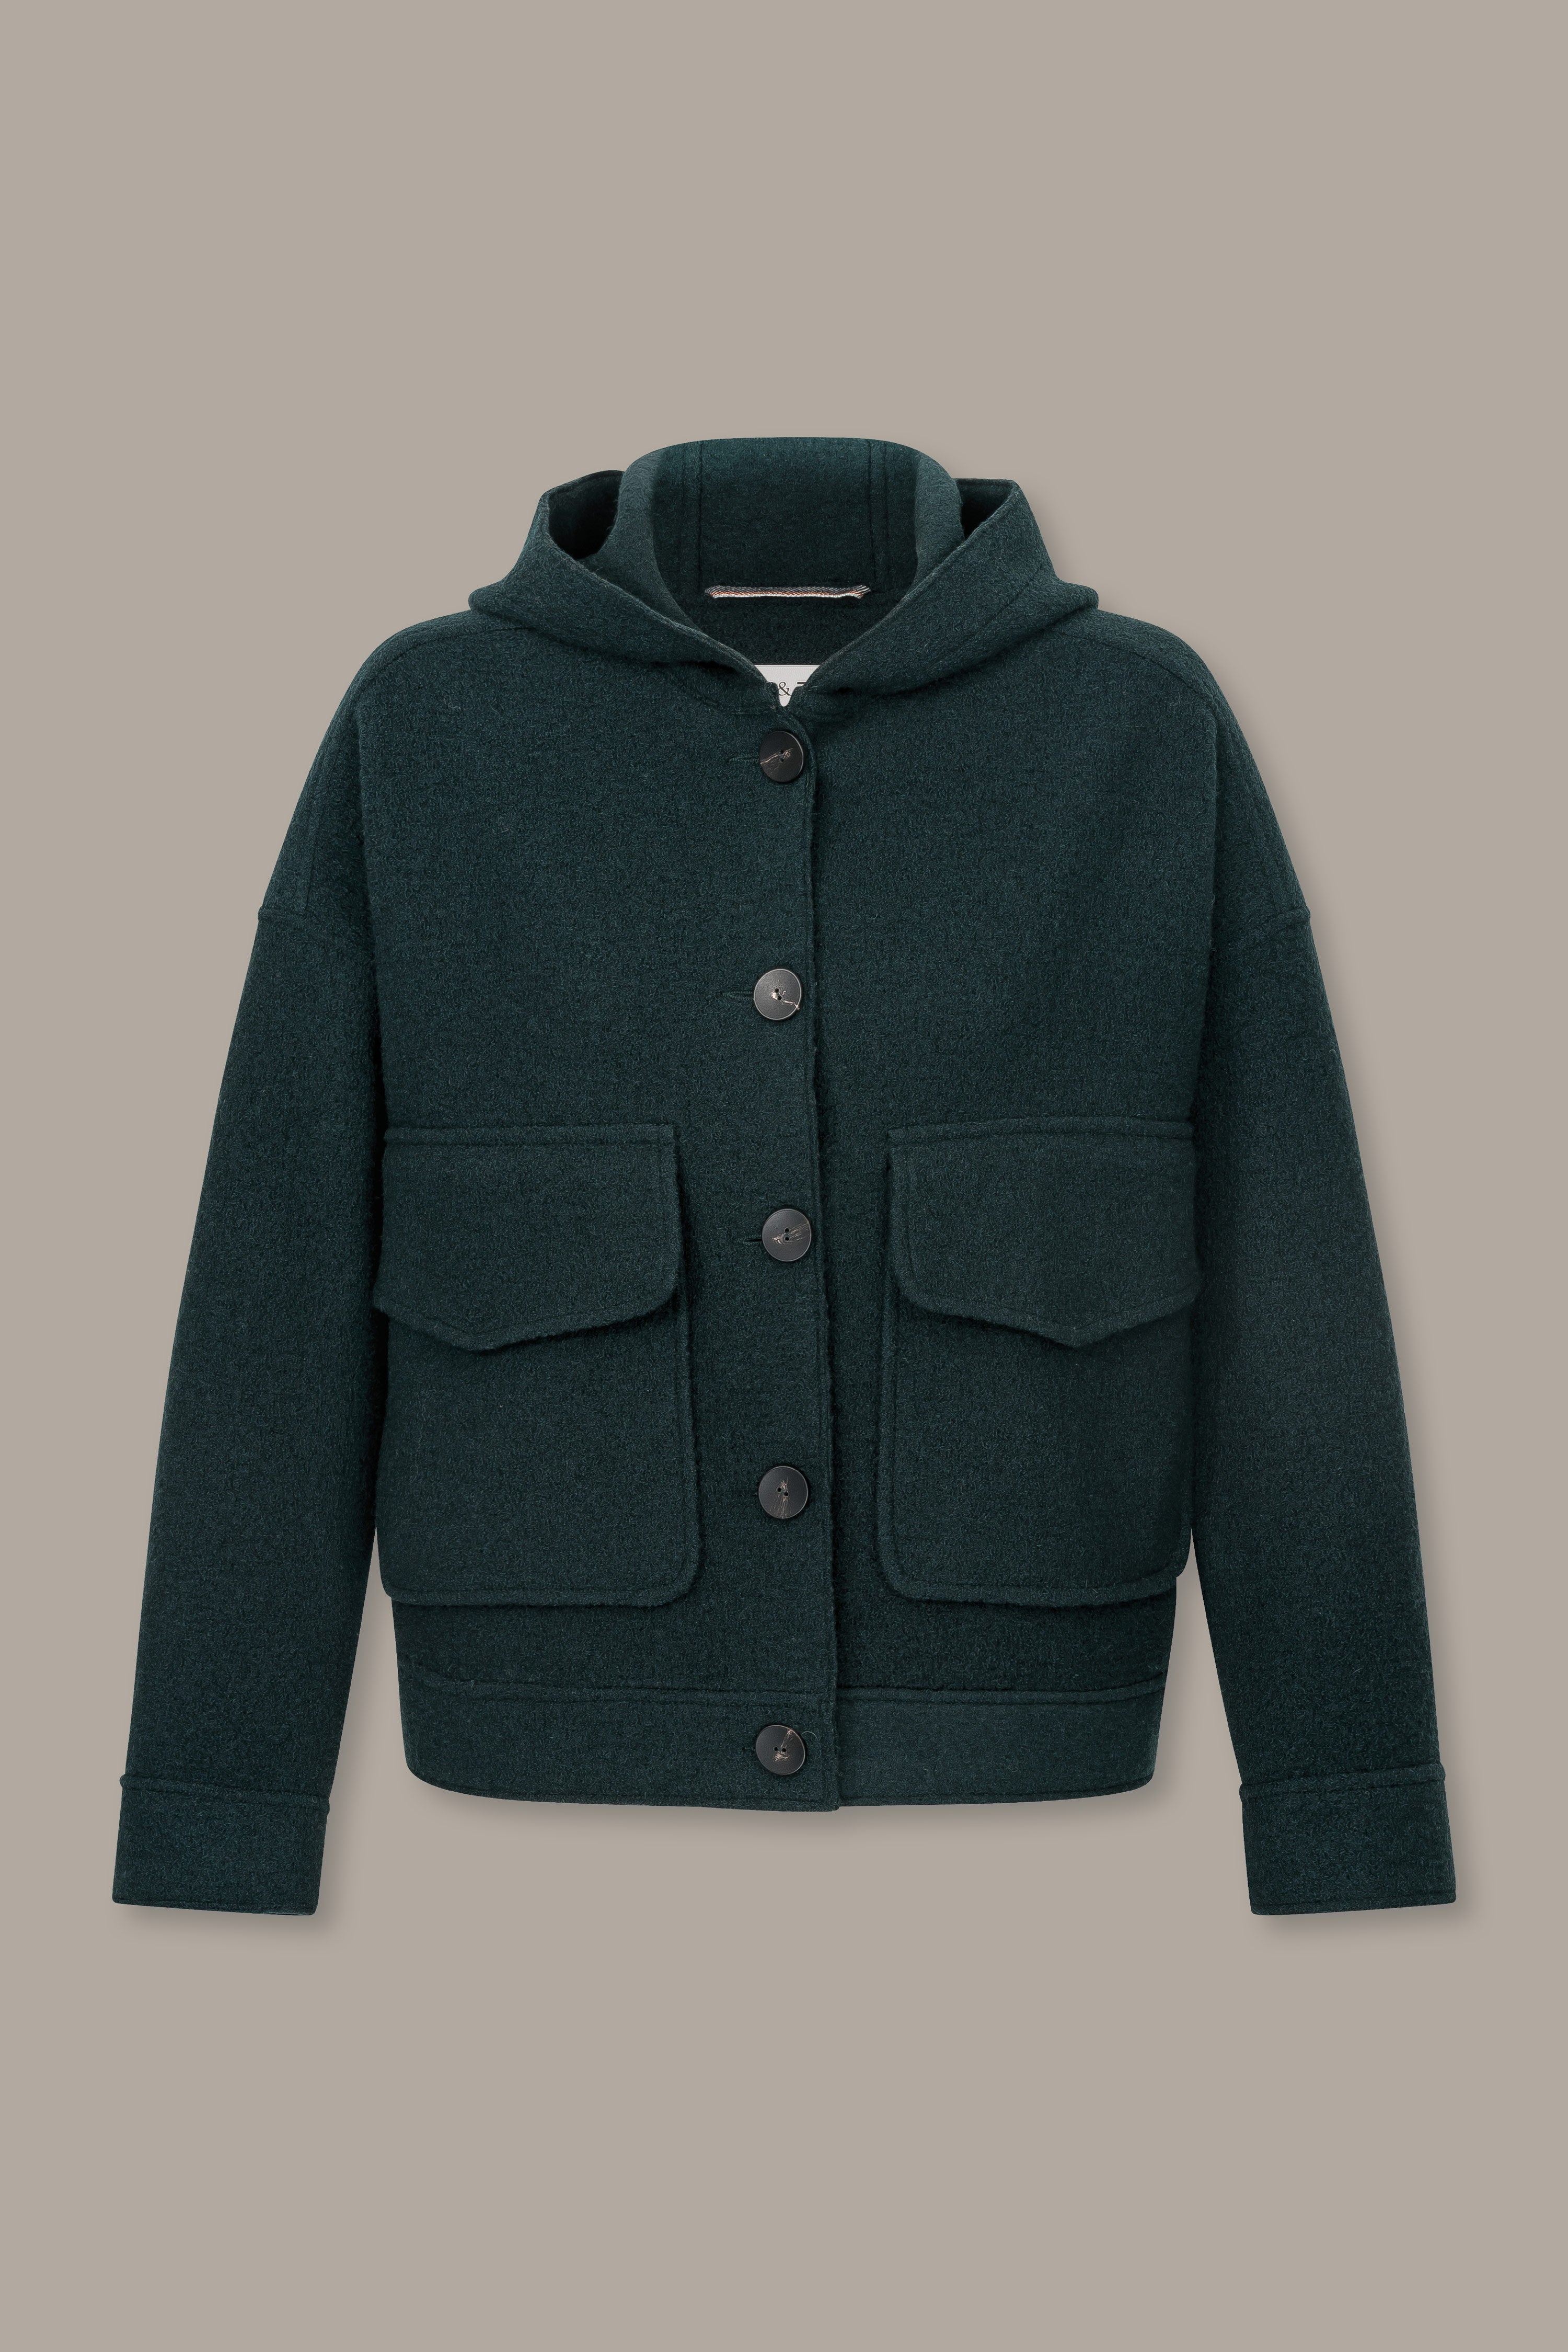 Wool jacket with a hood